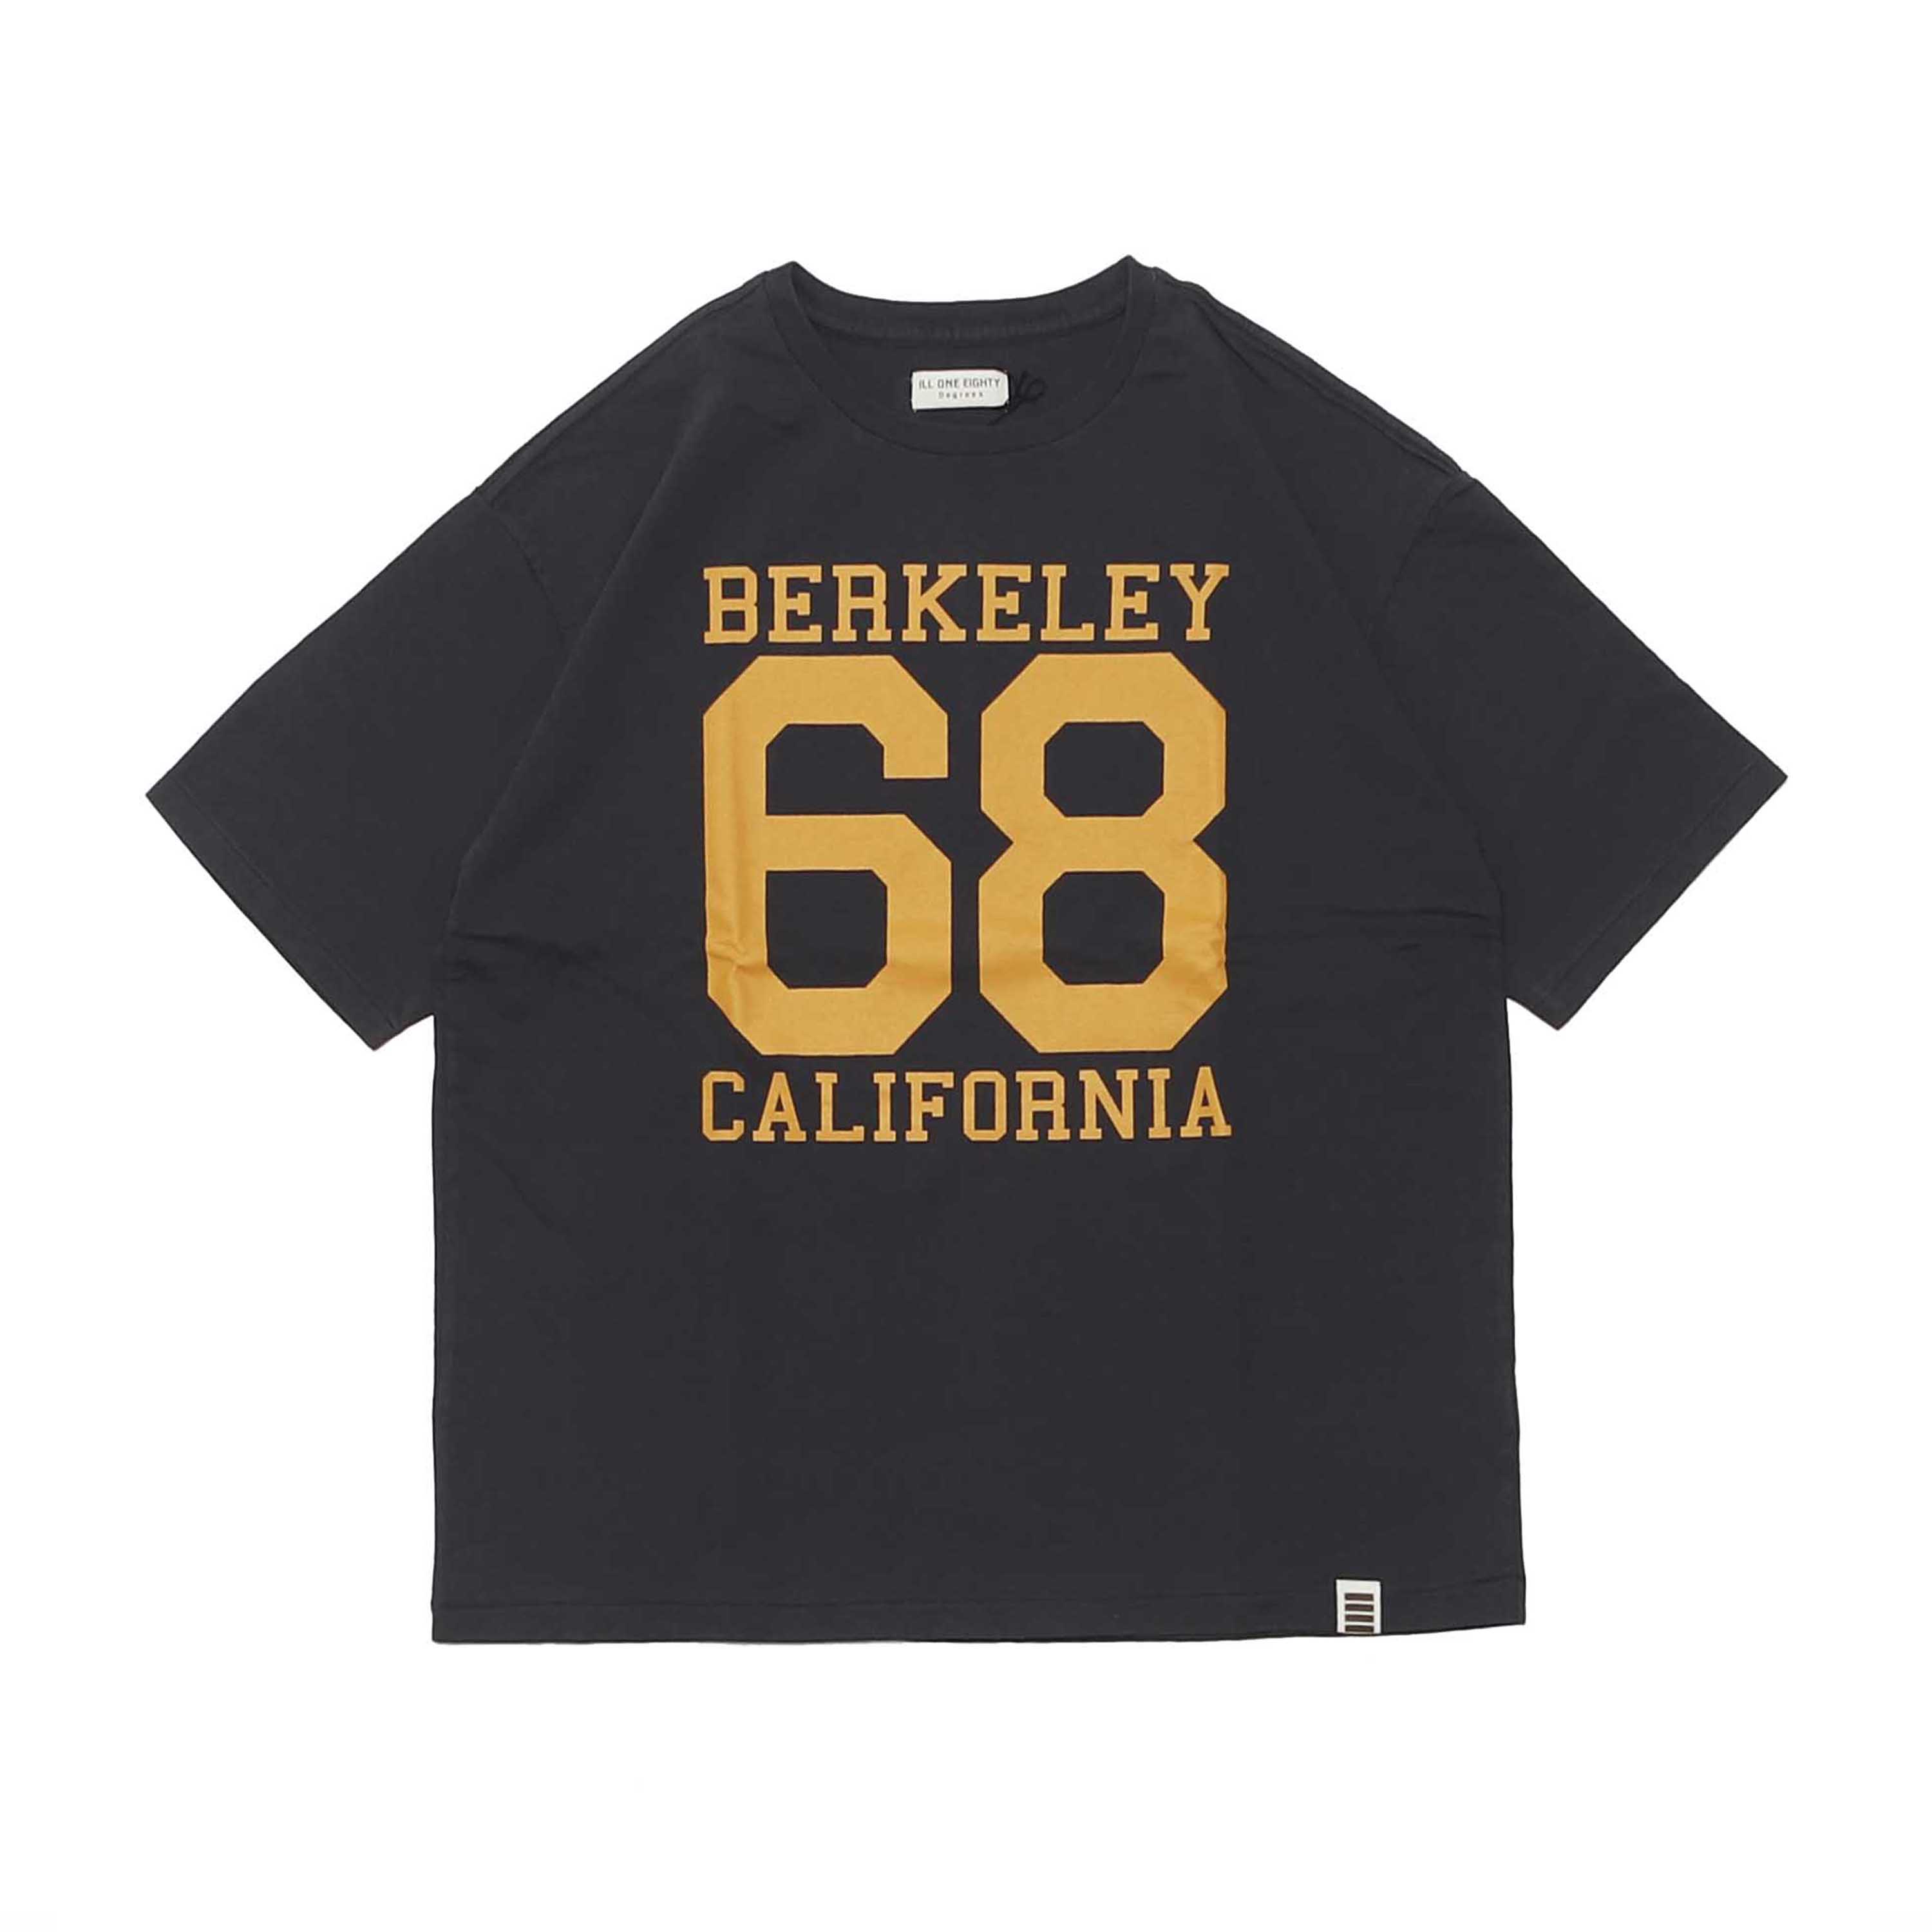 BERKELEY 68 - BLACK